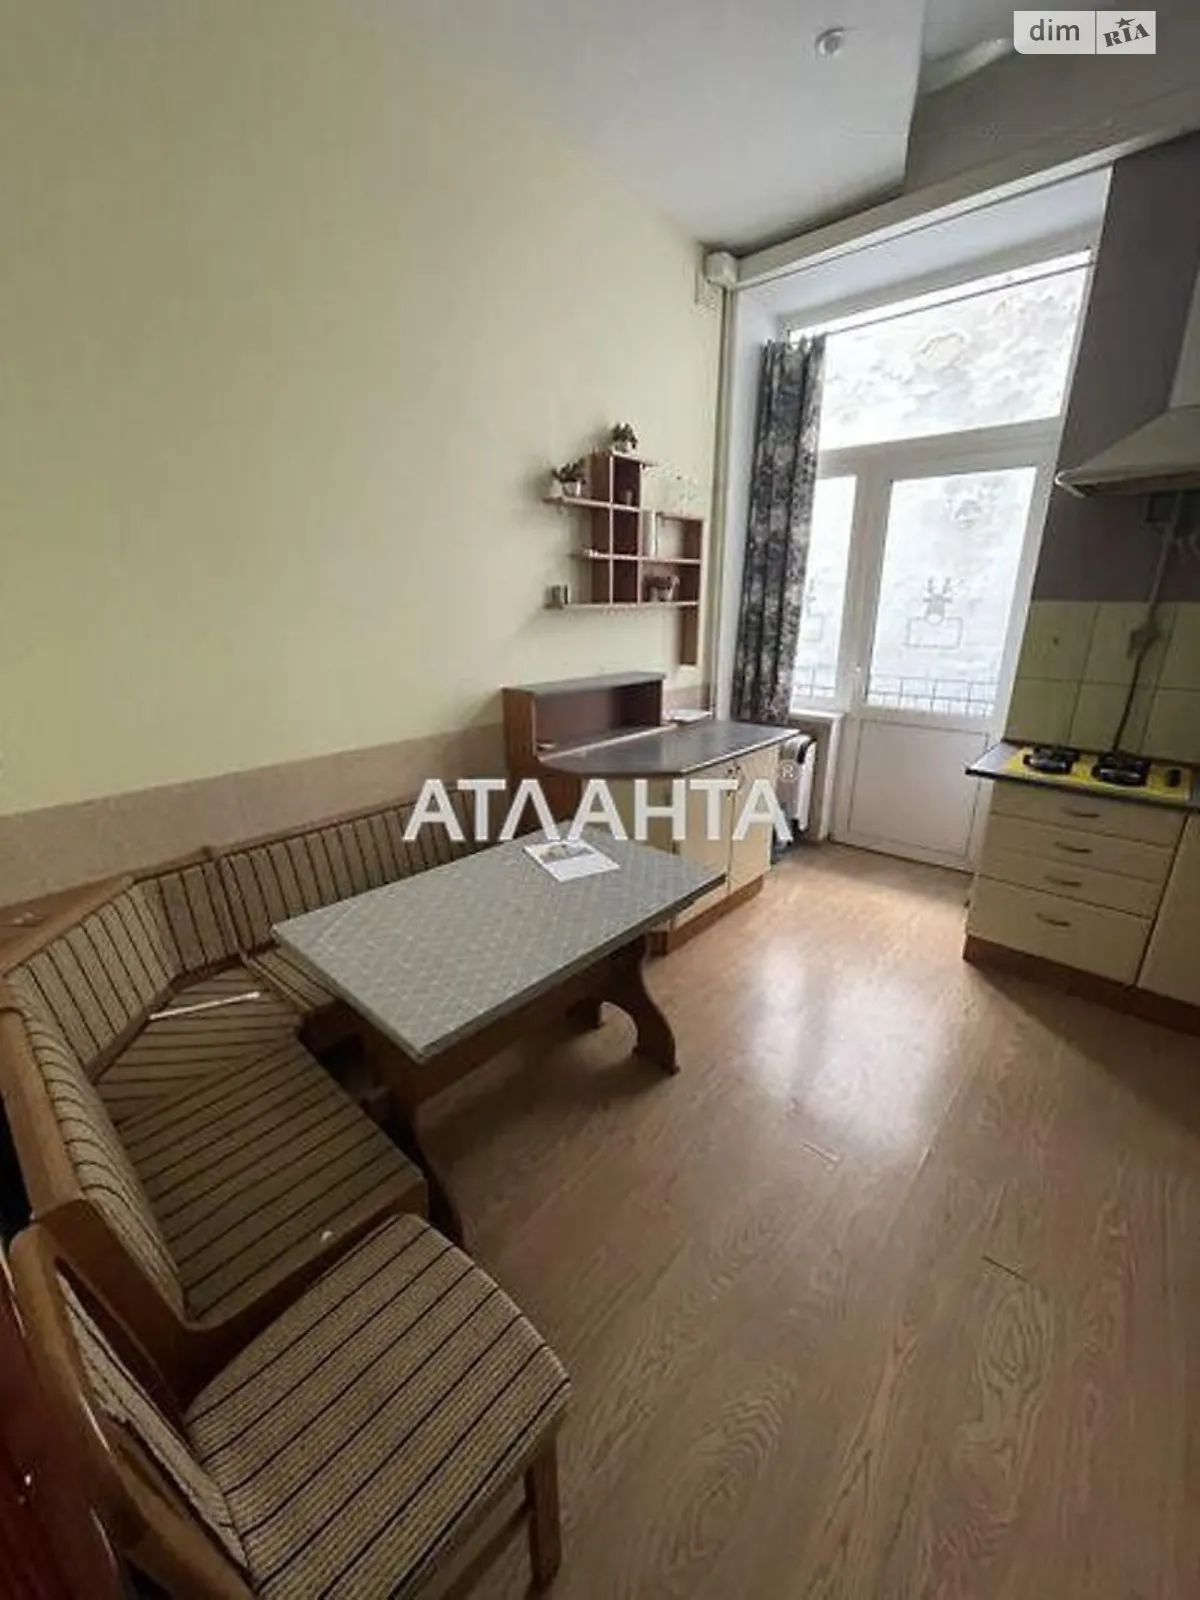 Продается 1-комнатная квартира 43.9 кв. м в Львове, ул. Костя Левицкого - фото 1